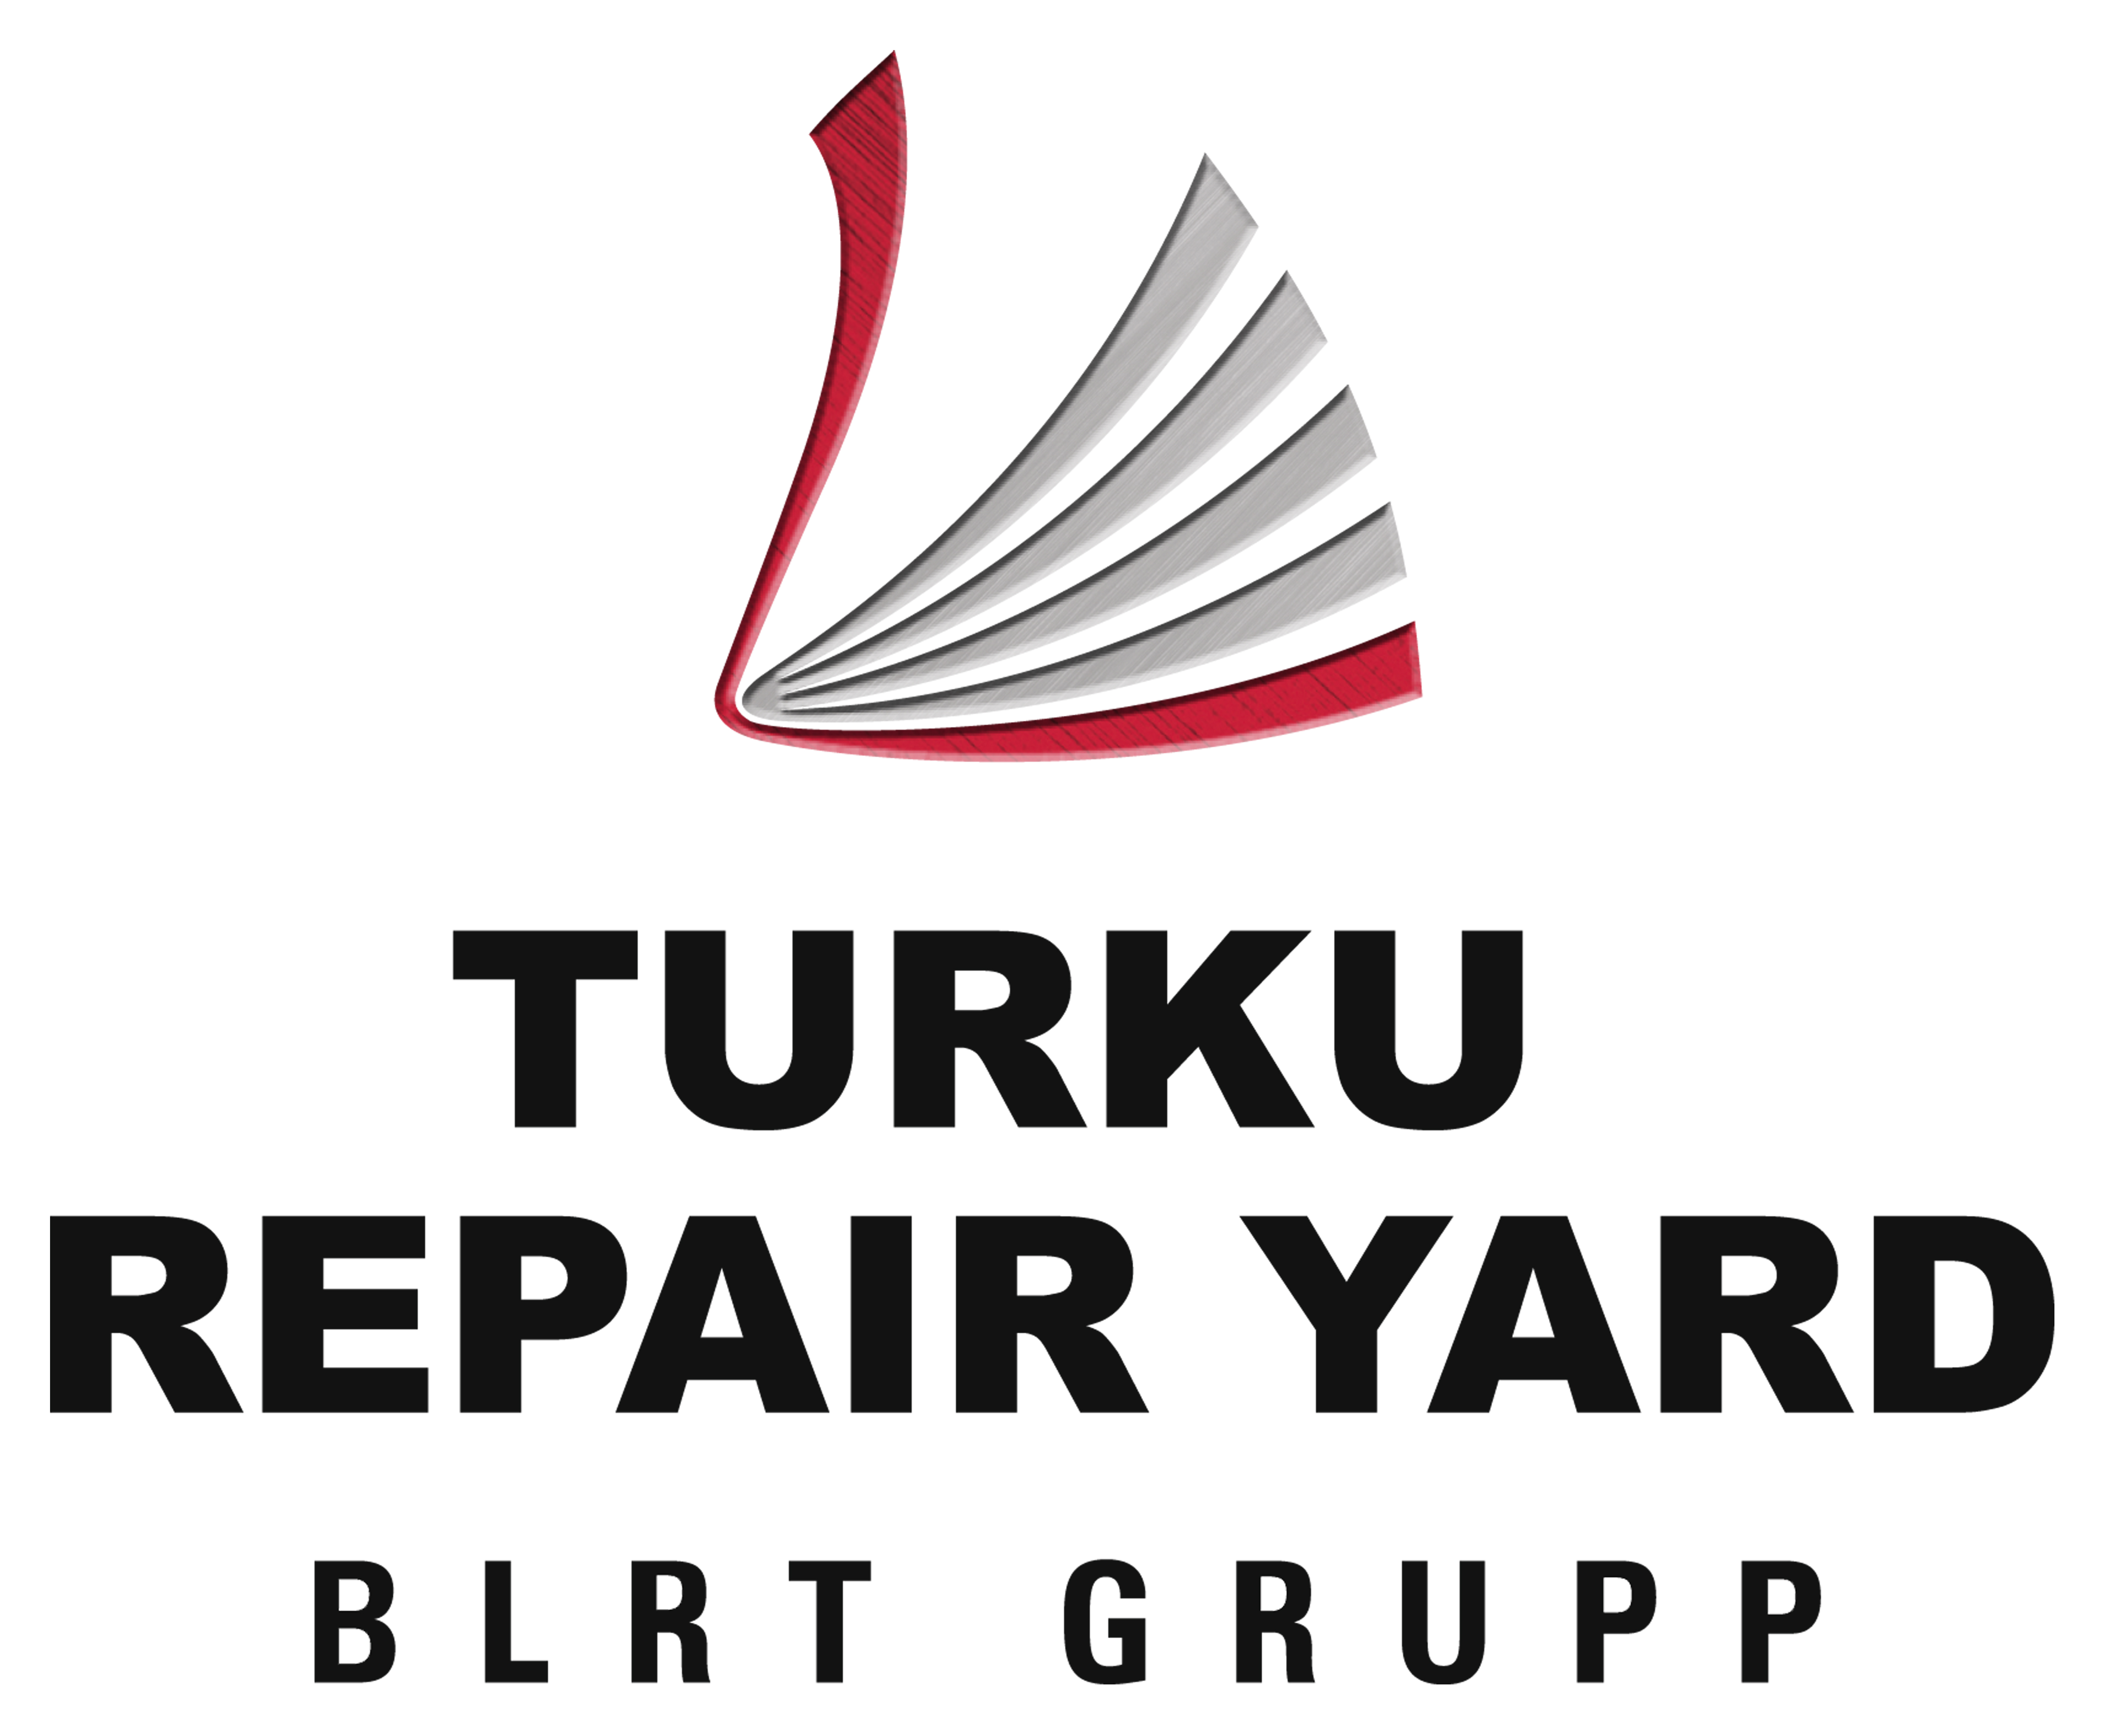 TURKU REPAIR YARD LTD